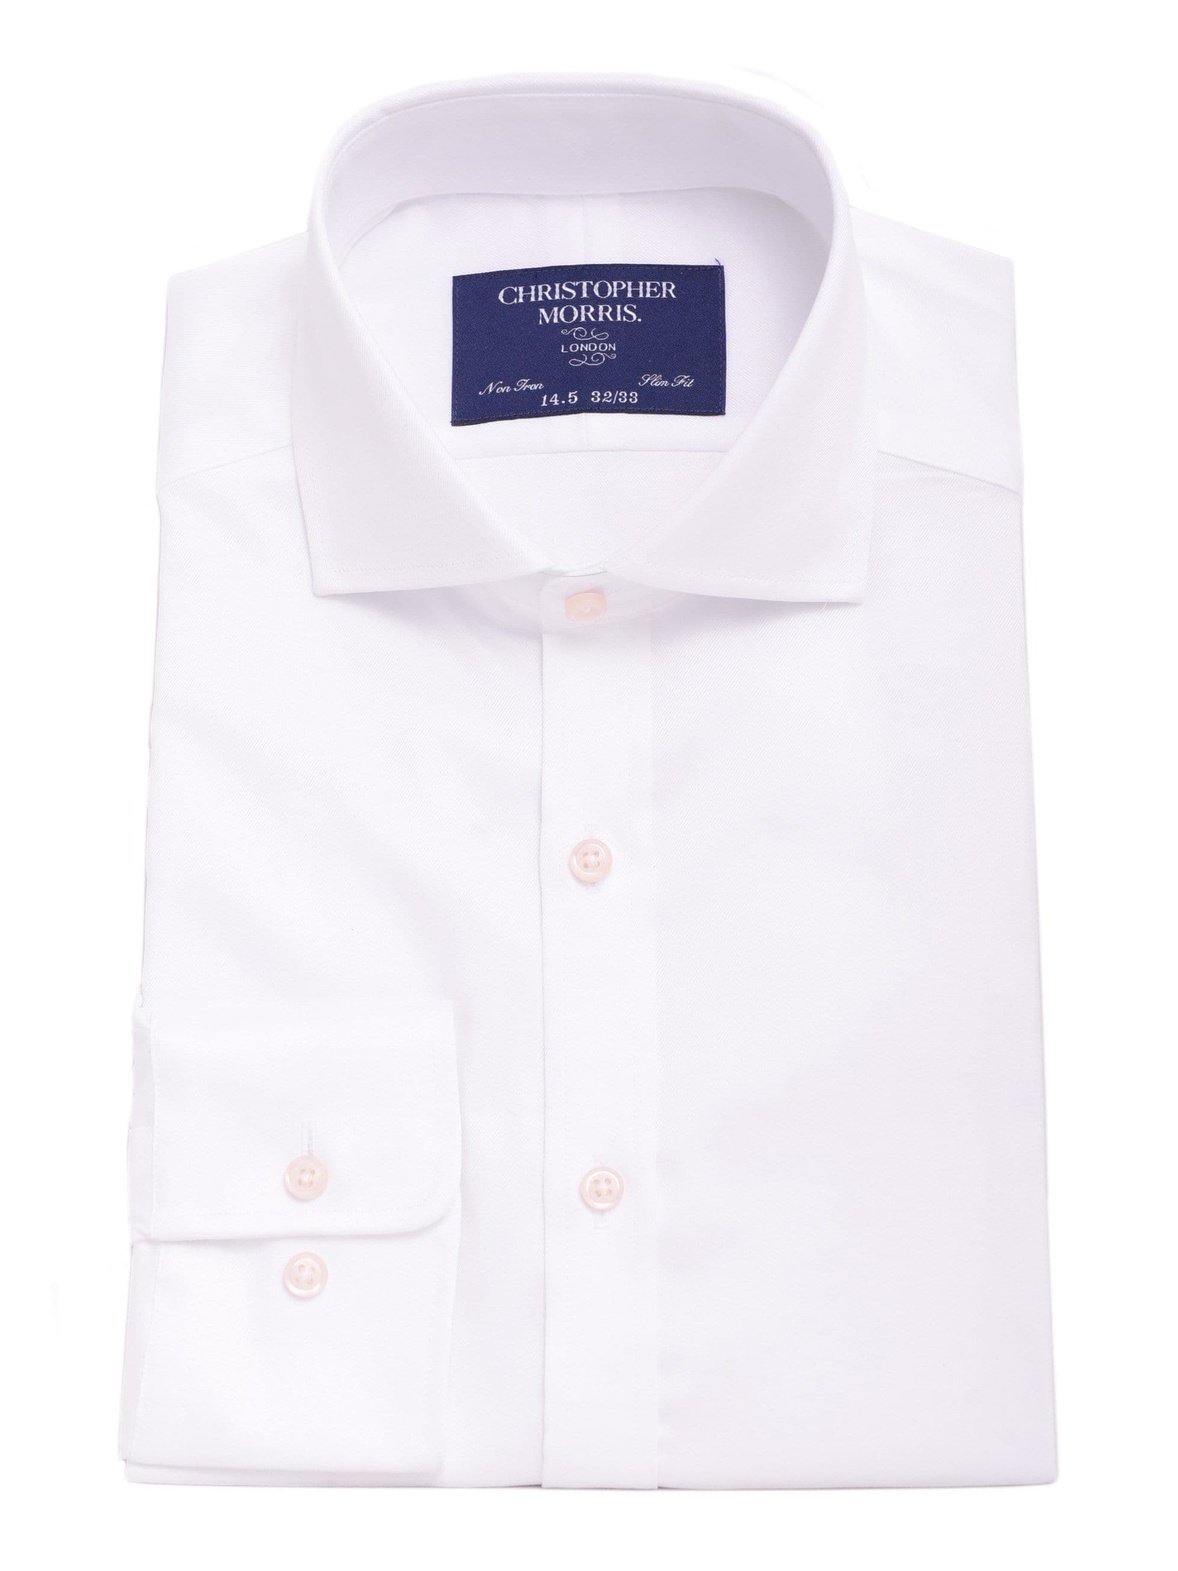 Christopher Morris Mens Bestselling Shirts 14 1/2 32/33 Christopher Morris Men's 100% Cotton Solid White Non-Iron Slim Fit Dress Shirt